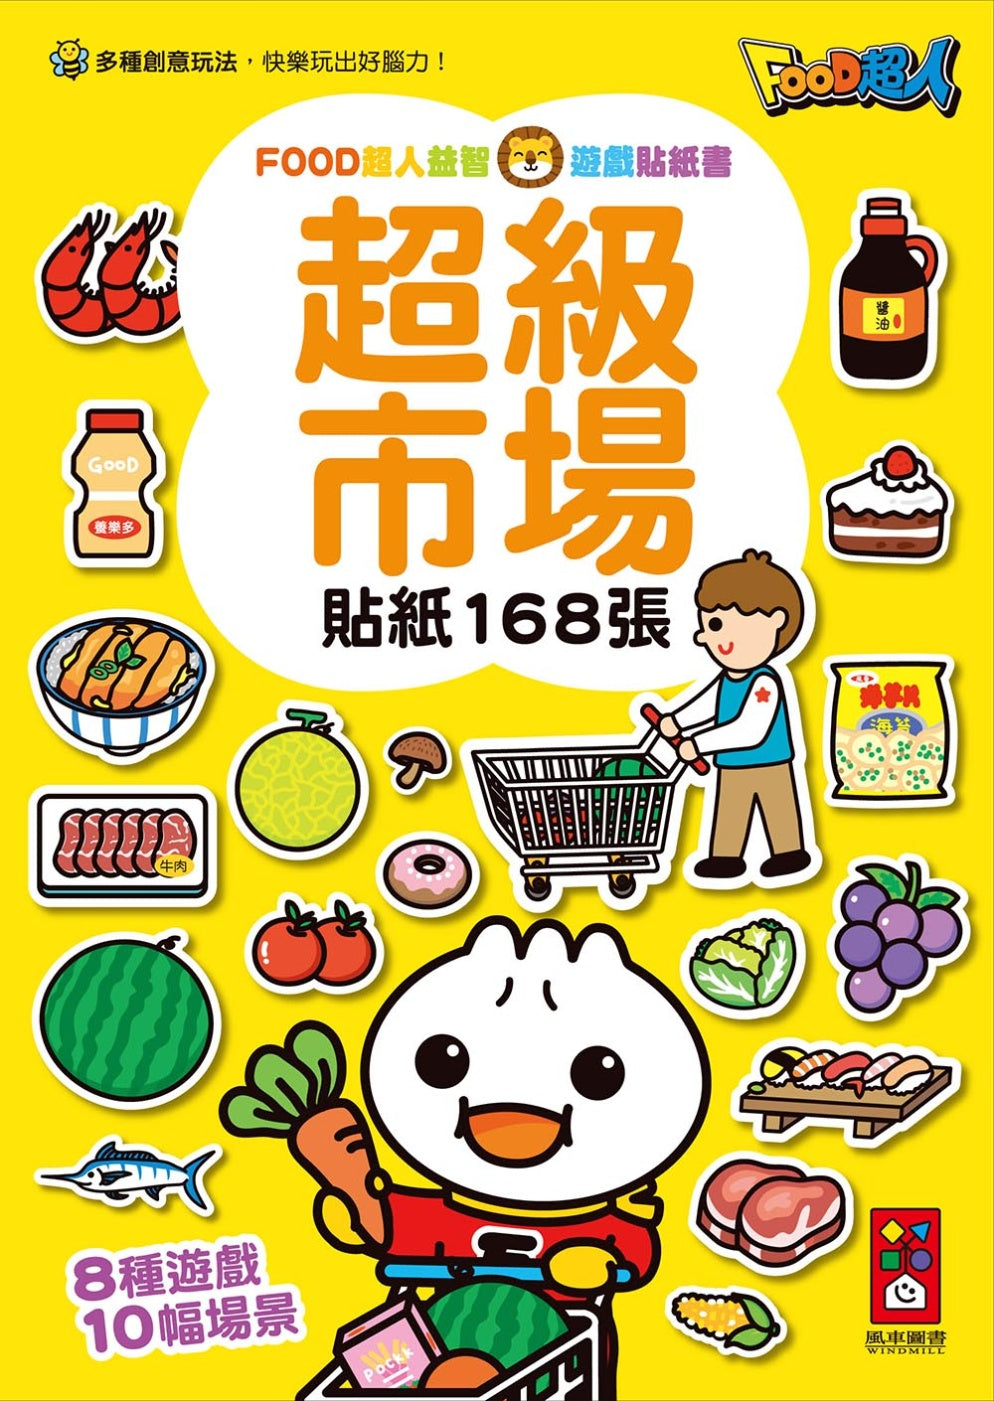 FOOD Superhero Sticker Activity Books: The Supermarket • 超級市場：FOOD超人益智遊戲貼紙書